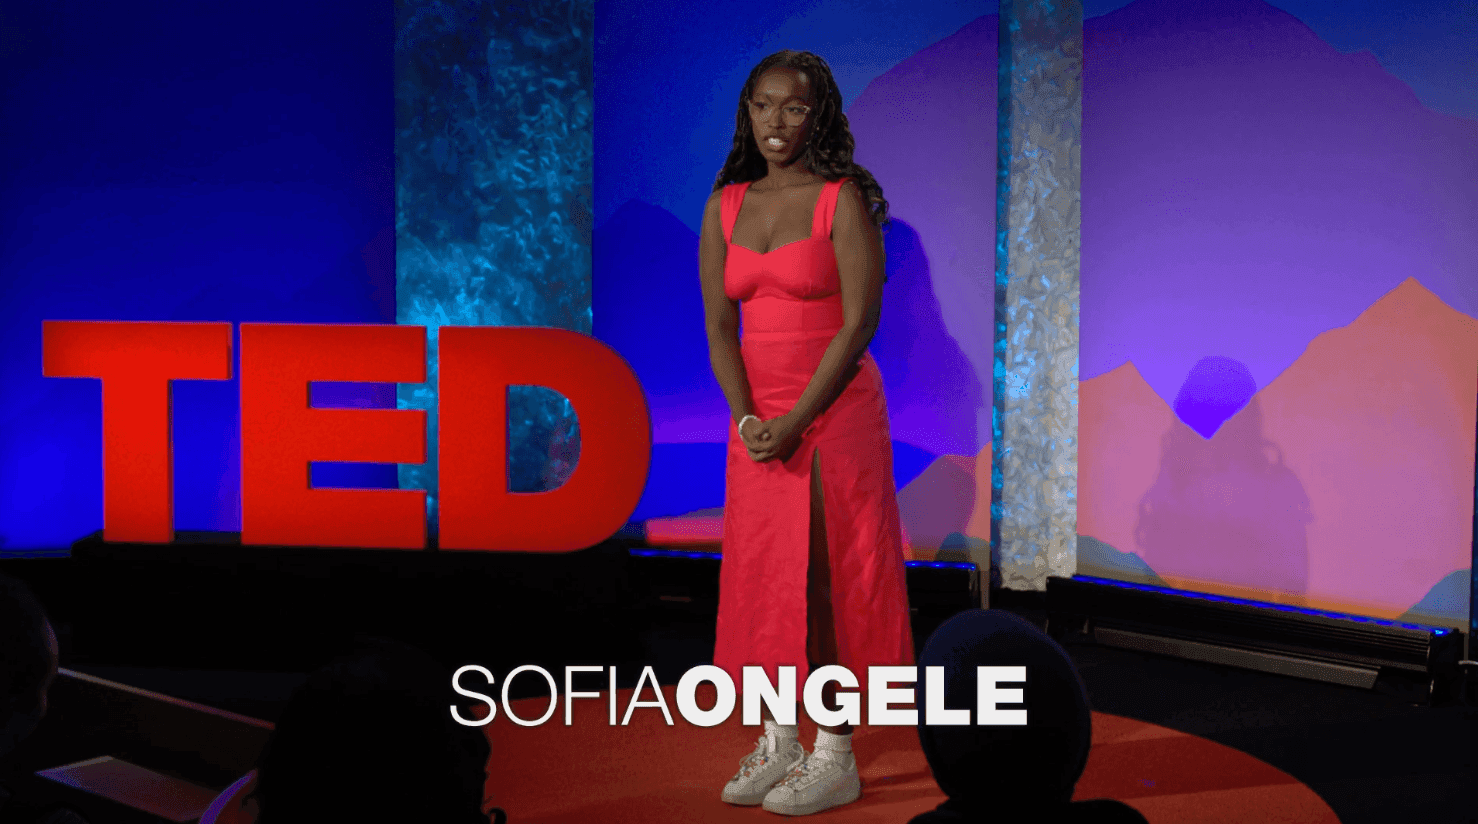 Sofia Ongele TEDx talk